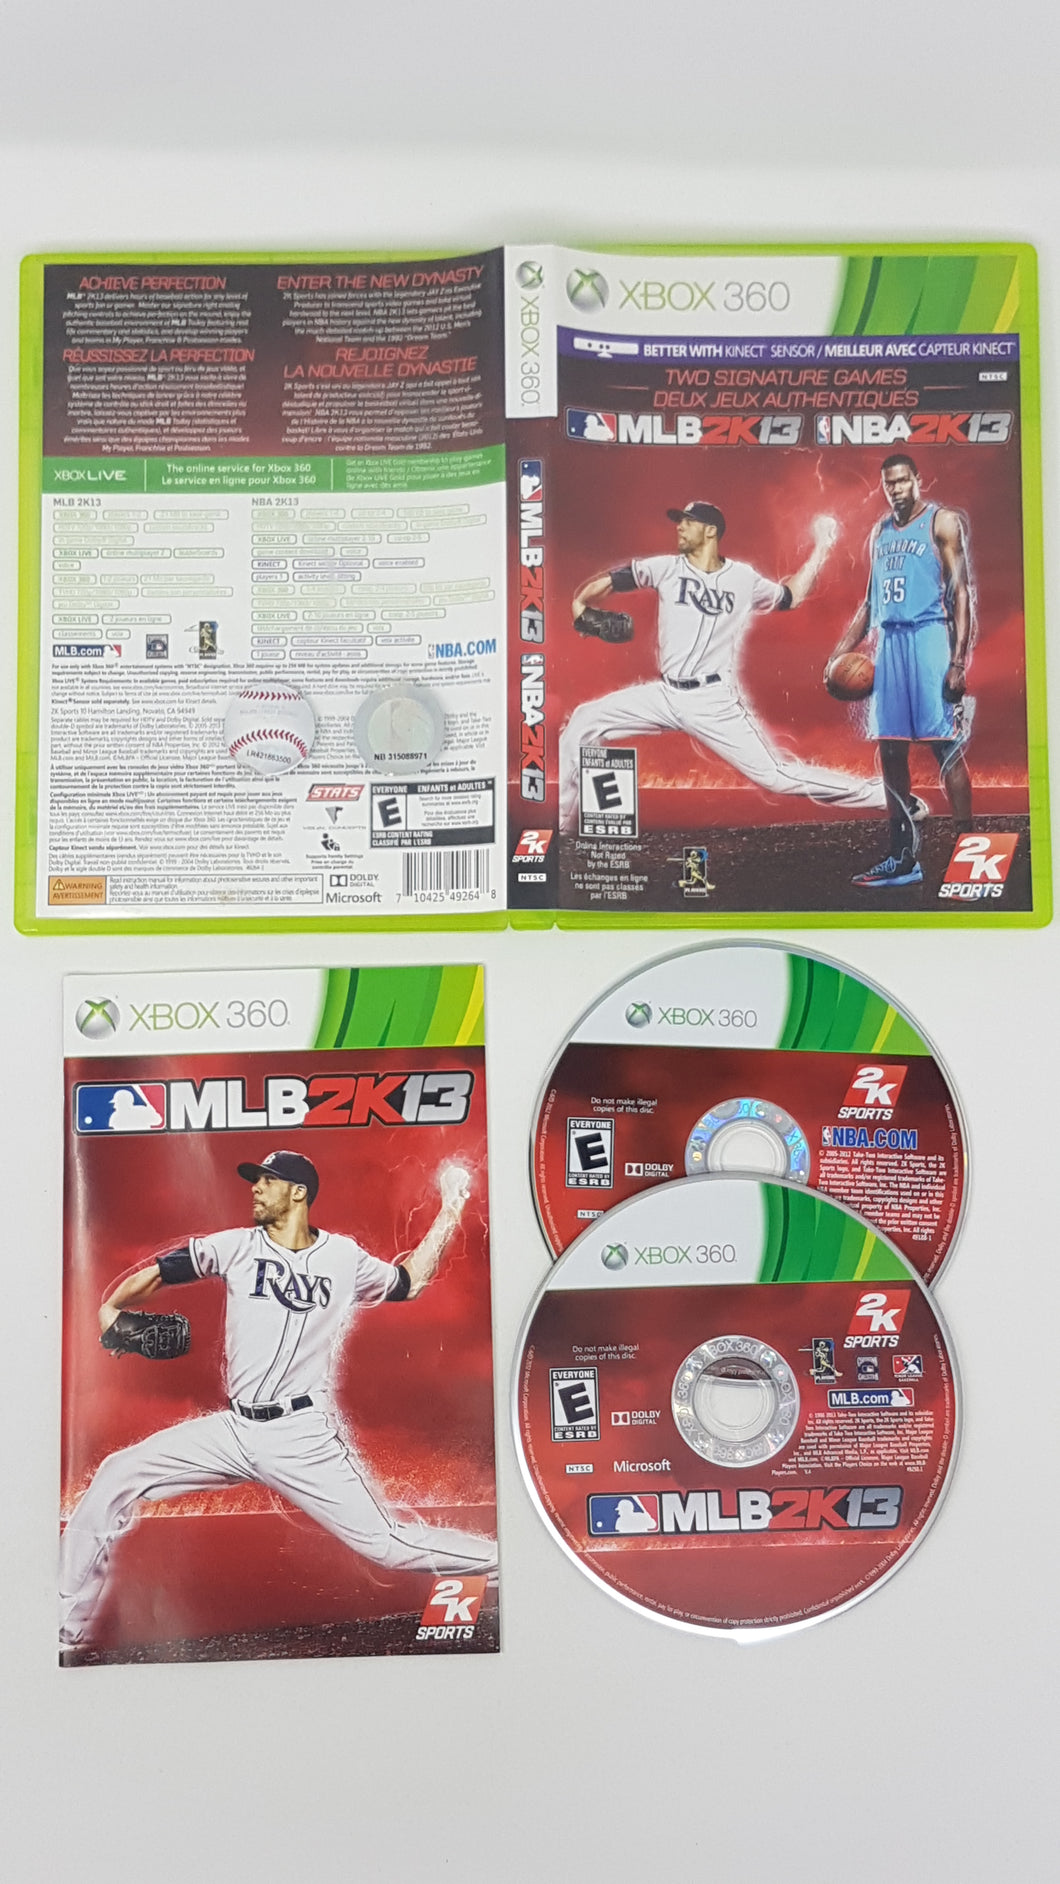 2K13 Sports Combo Pack MLB 2K13 NBA 2K13 - Microsoft Xbox 360